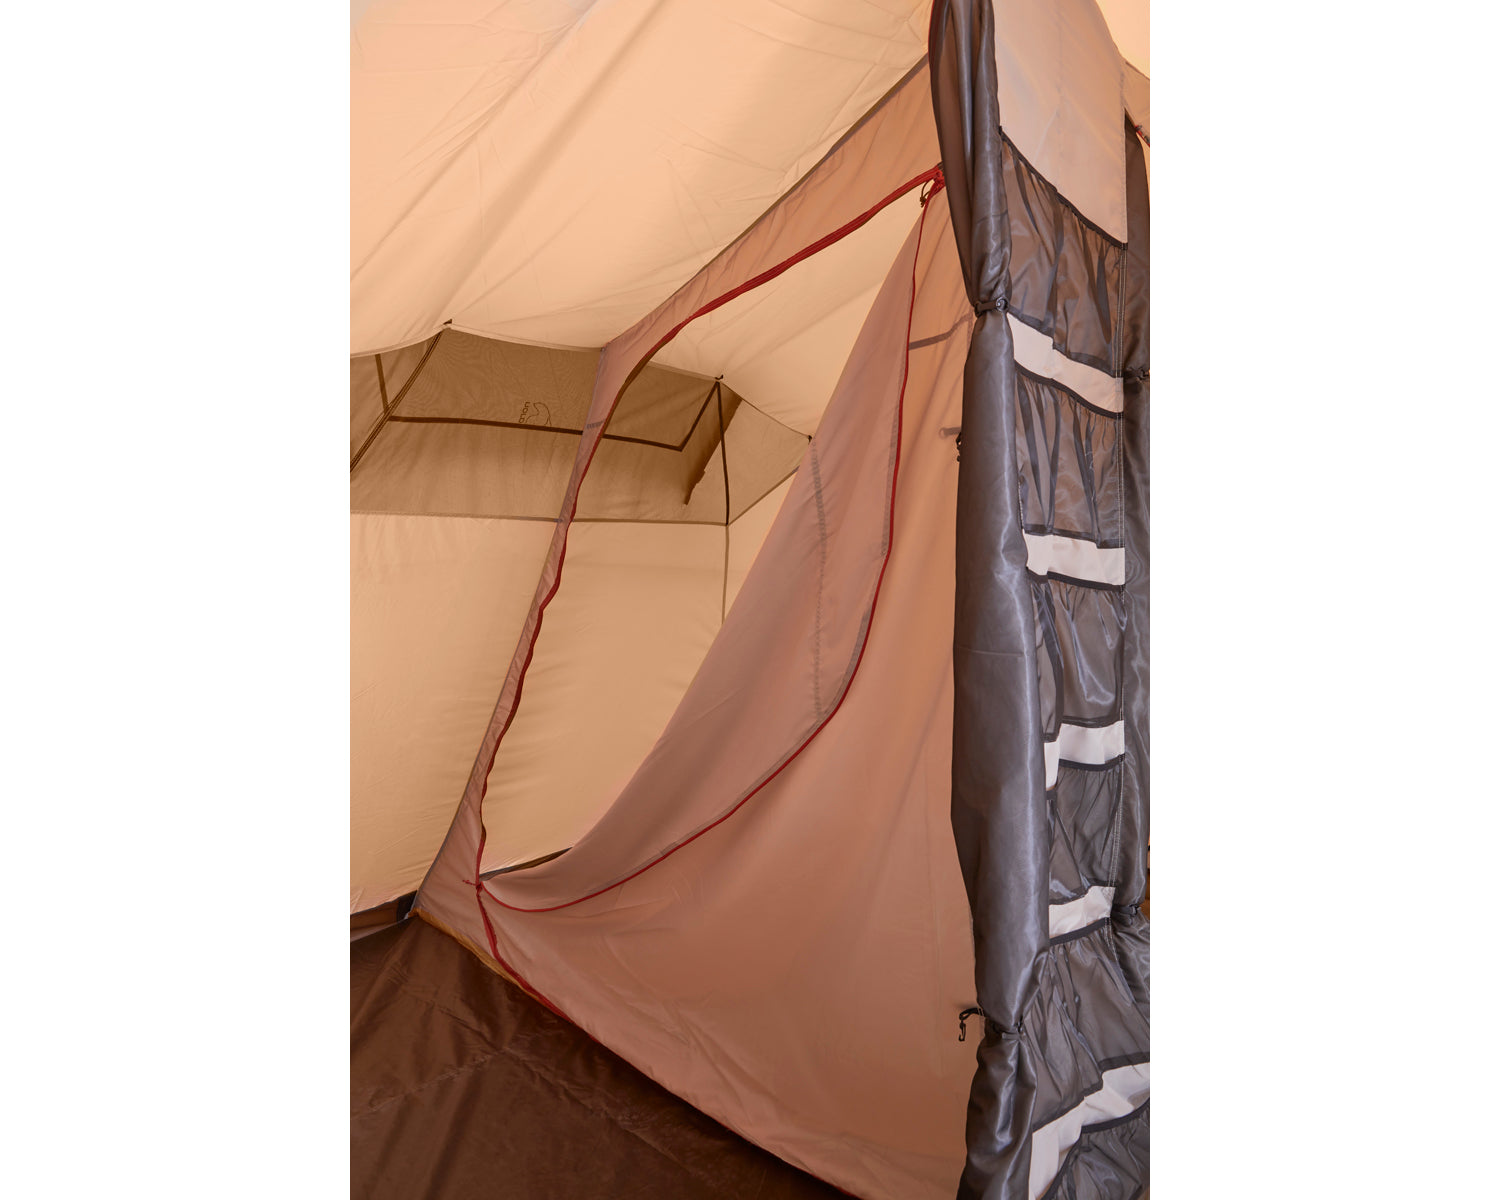 Reisa 6 PU tent - 6 person - Cashew/Brown